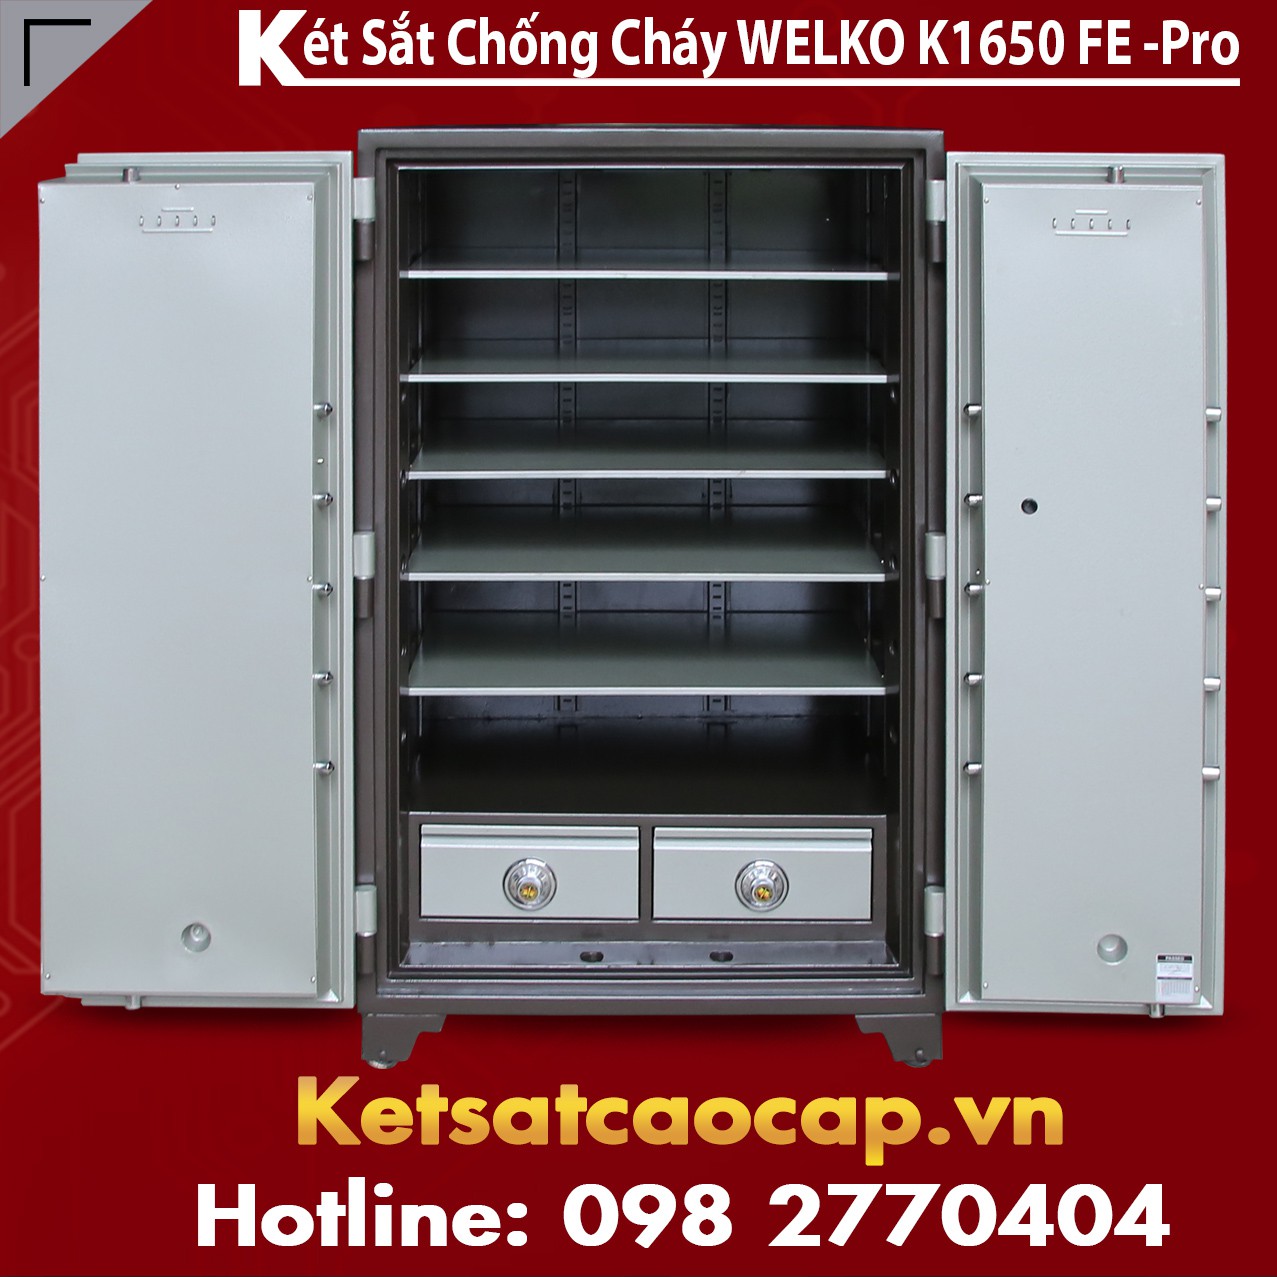 Ket Sat Chong Chay Welko K1650 FE - プロ